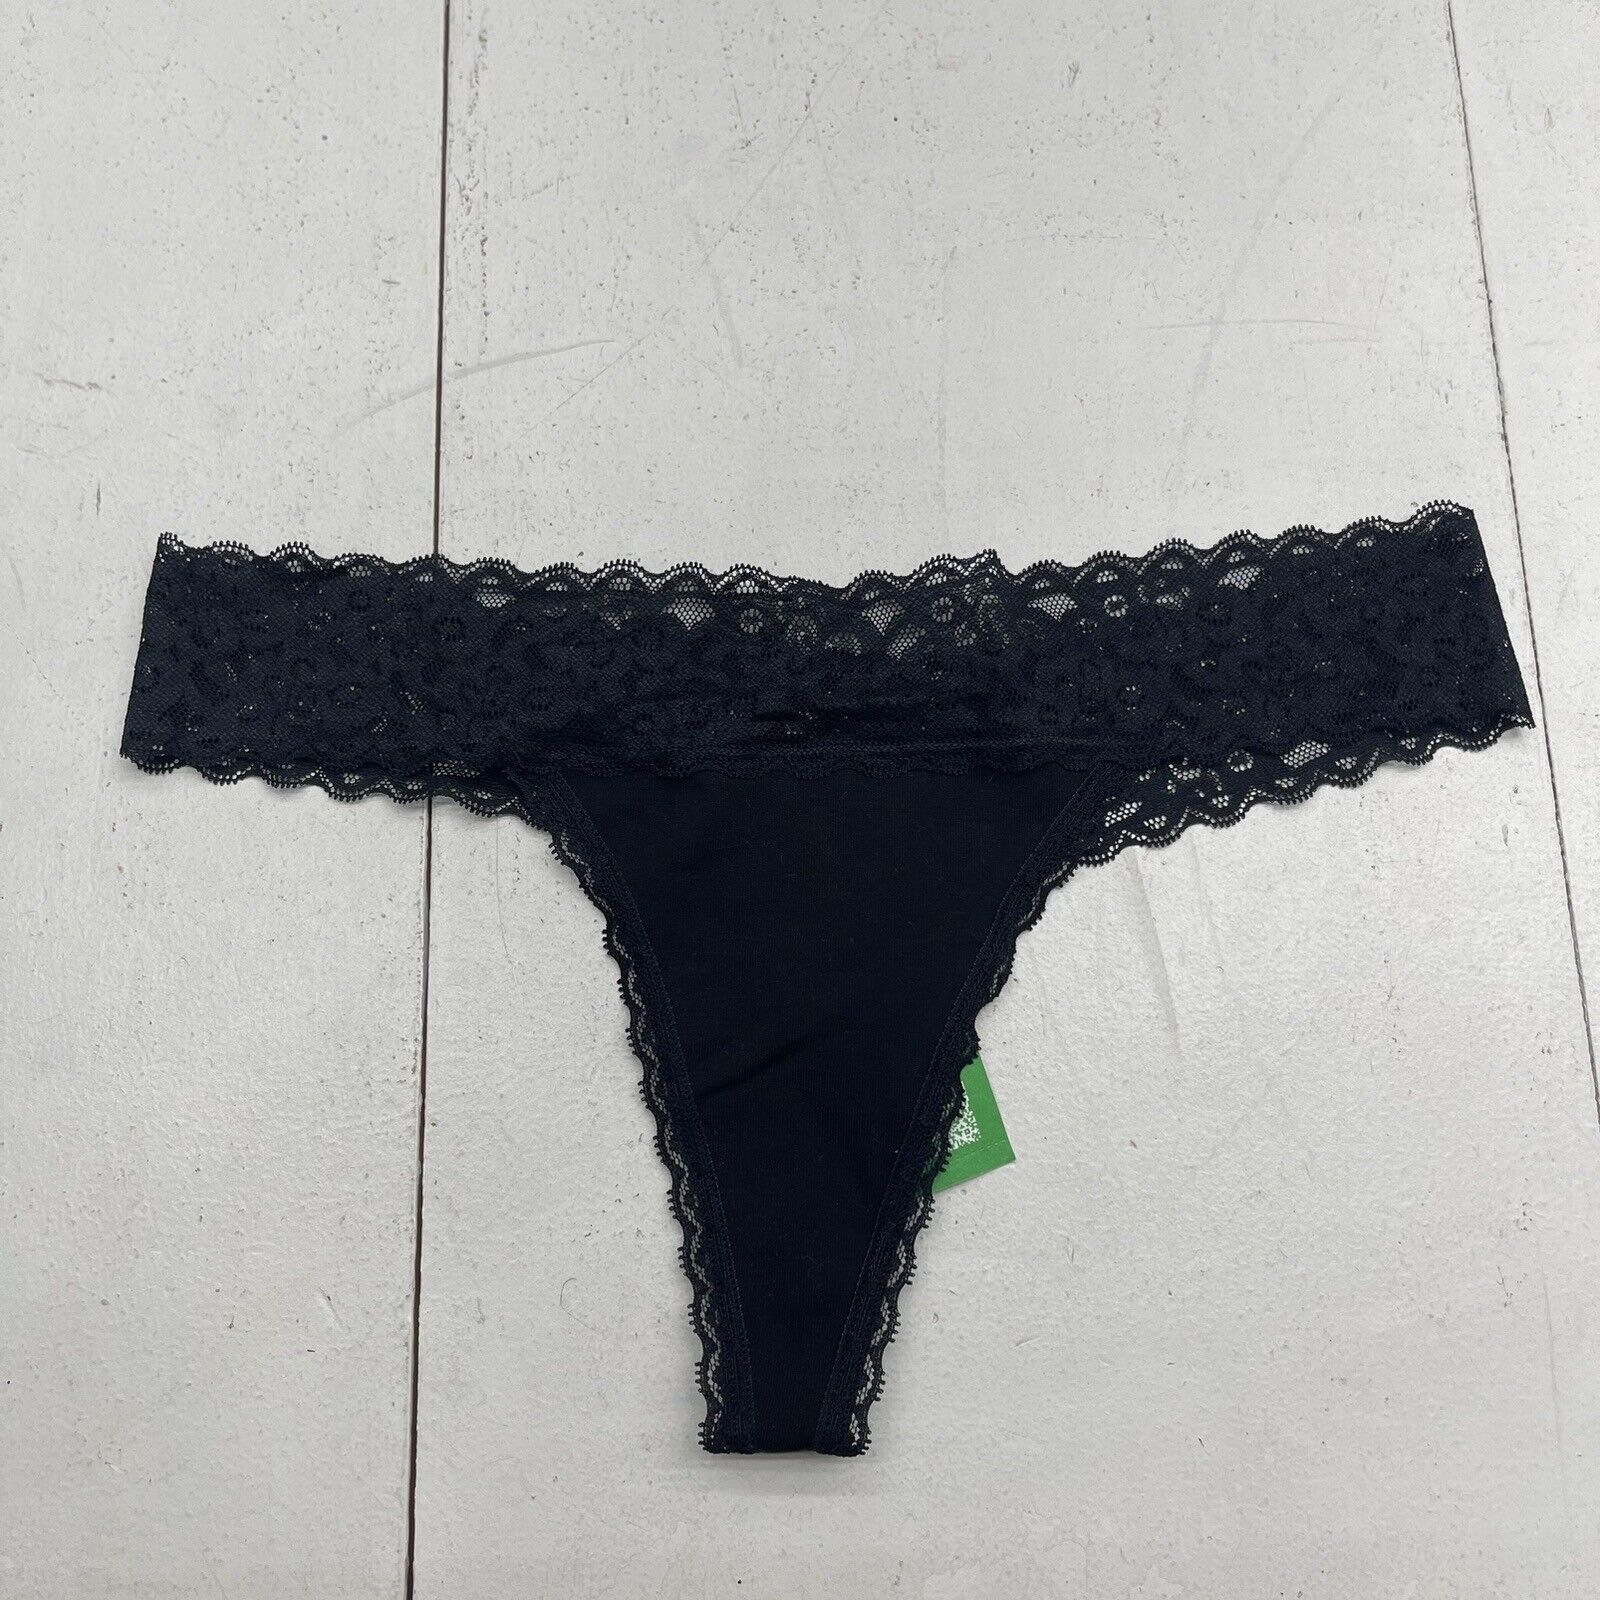 Gap Black Lace Trim Tong Underwear Women’s Size Medium New